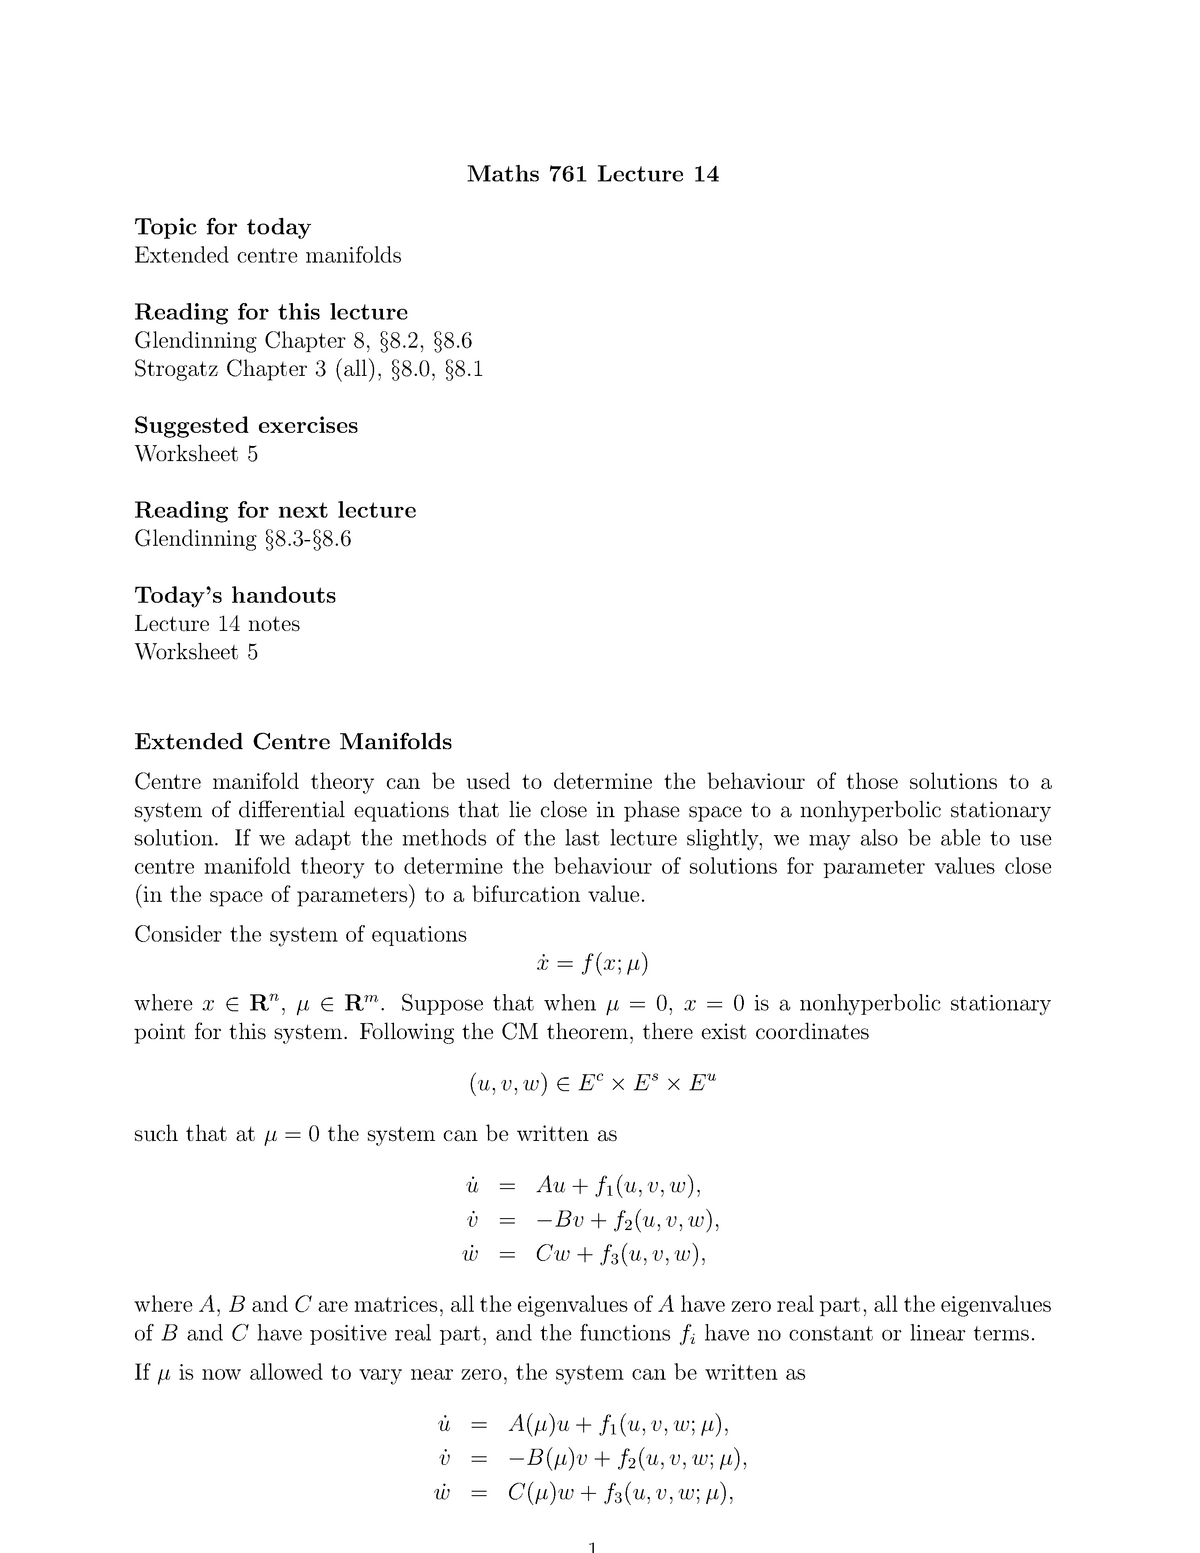 Maths761 10 Lecture Summary 14 Studocu